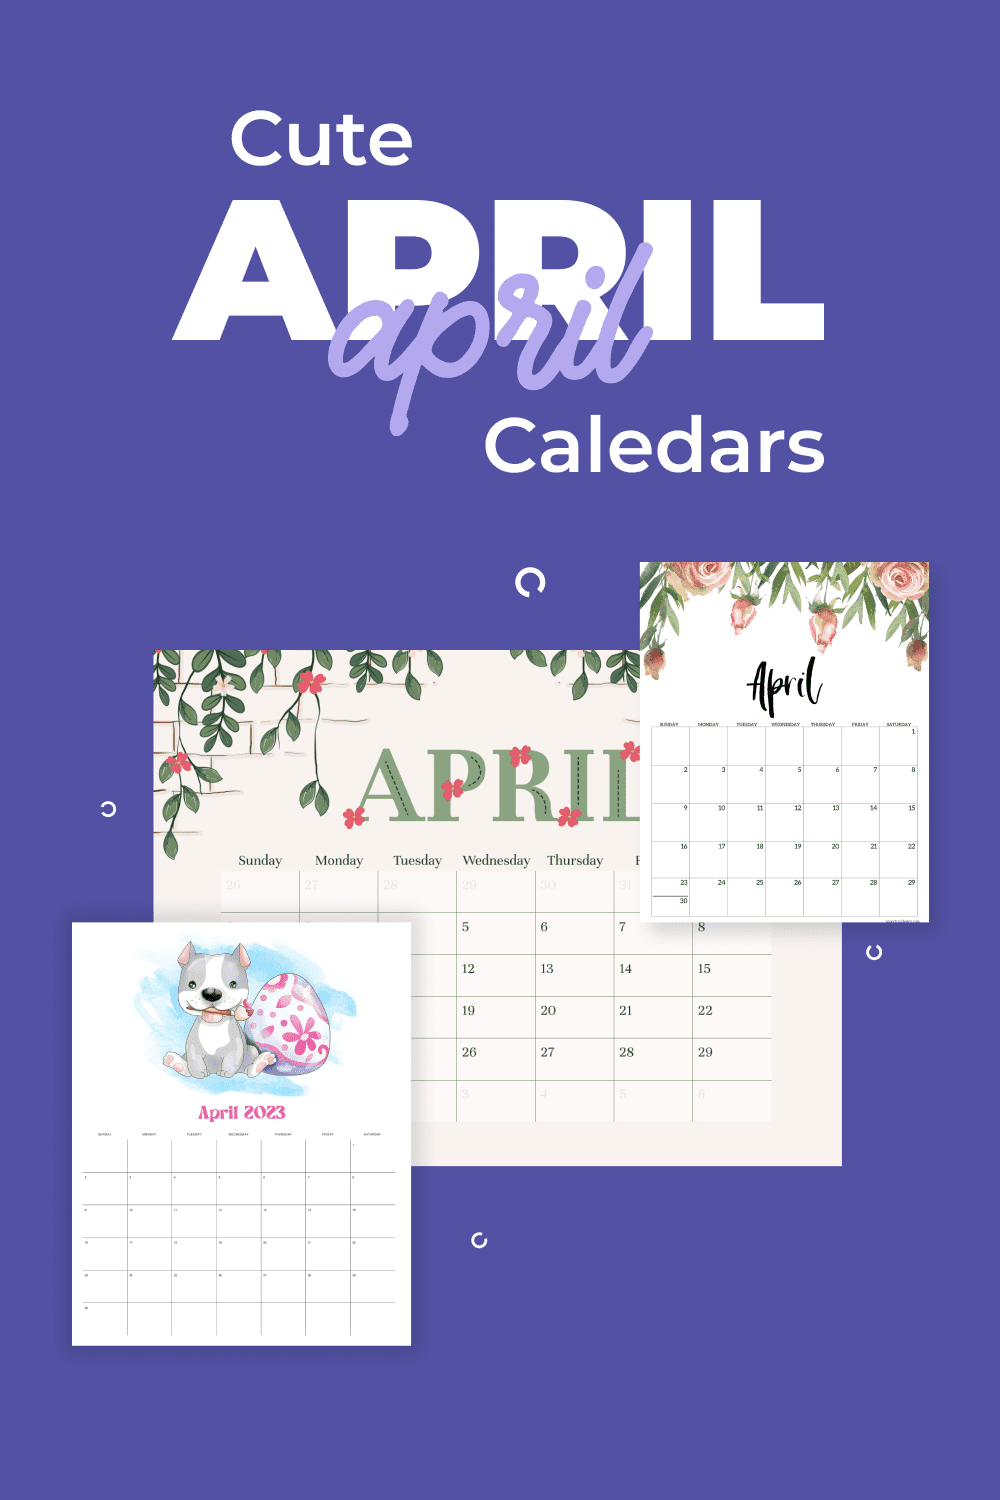 Calendar with the words cute apri calendars on it.